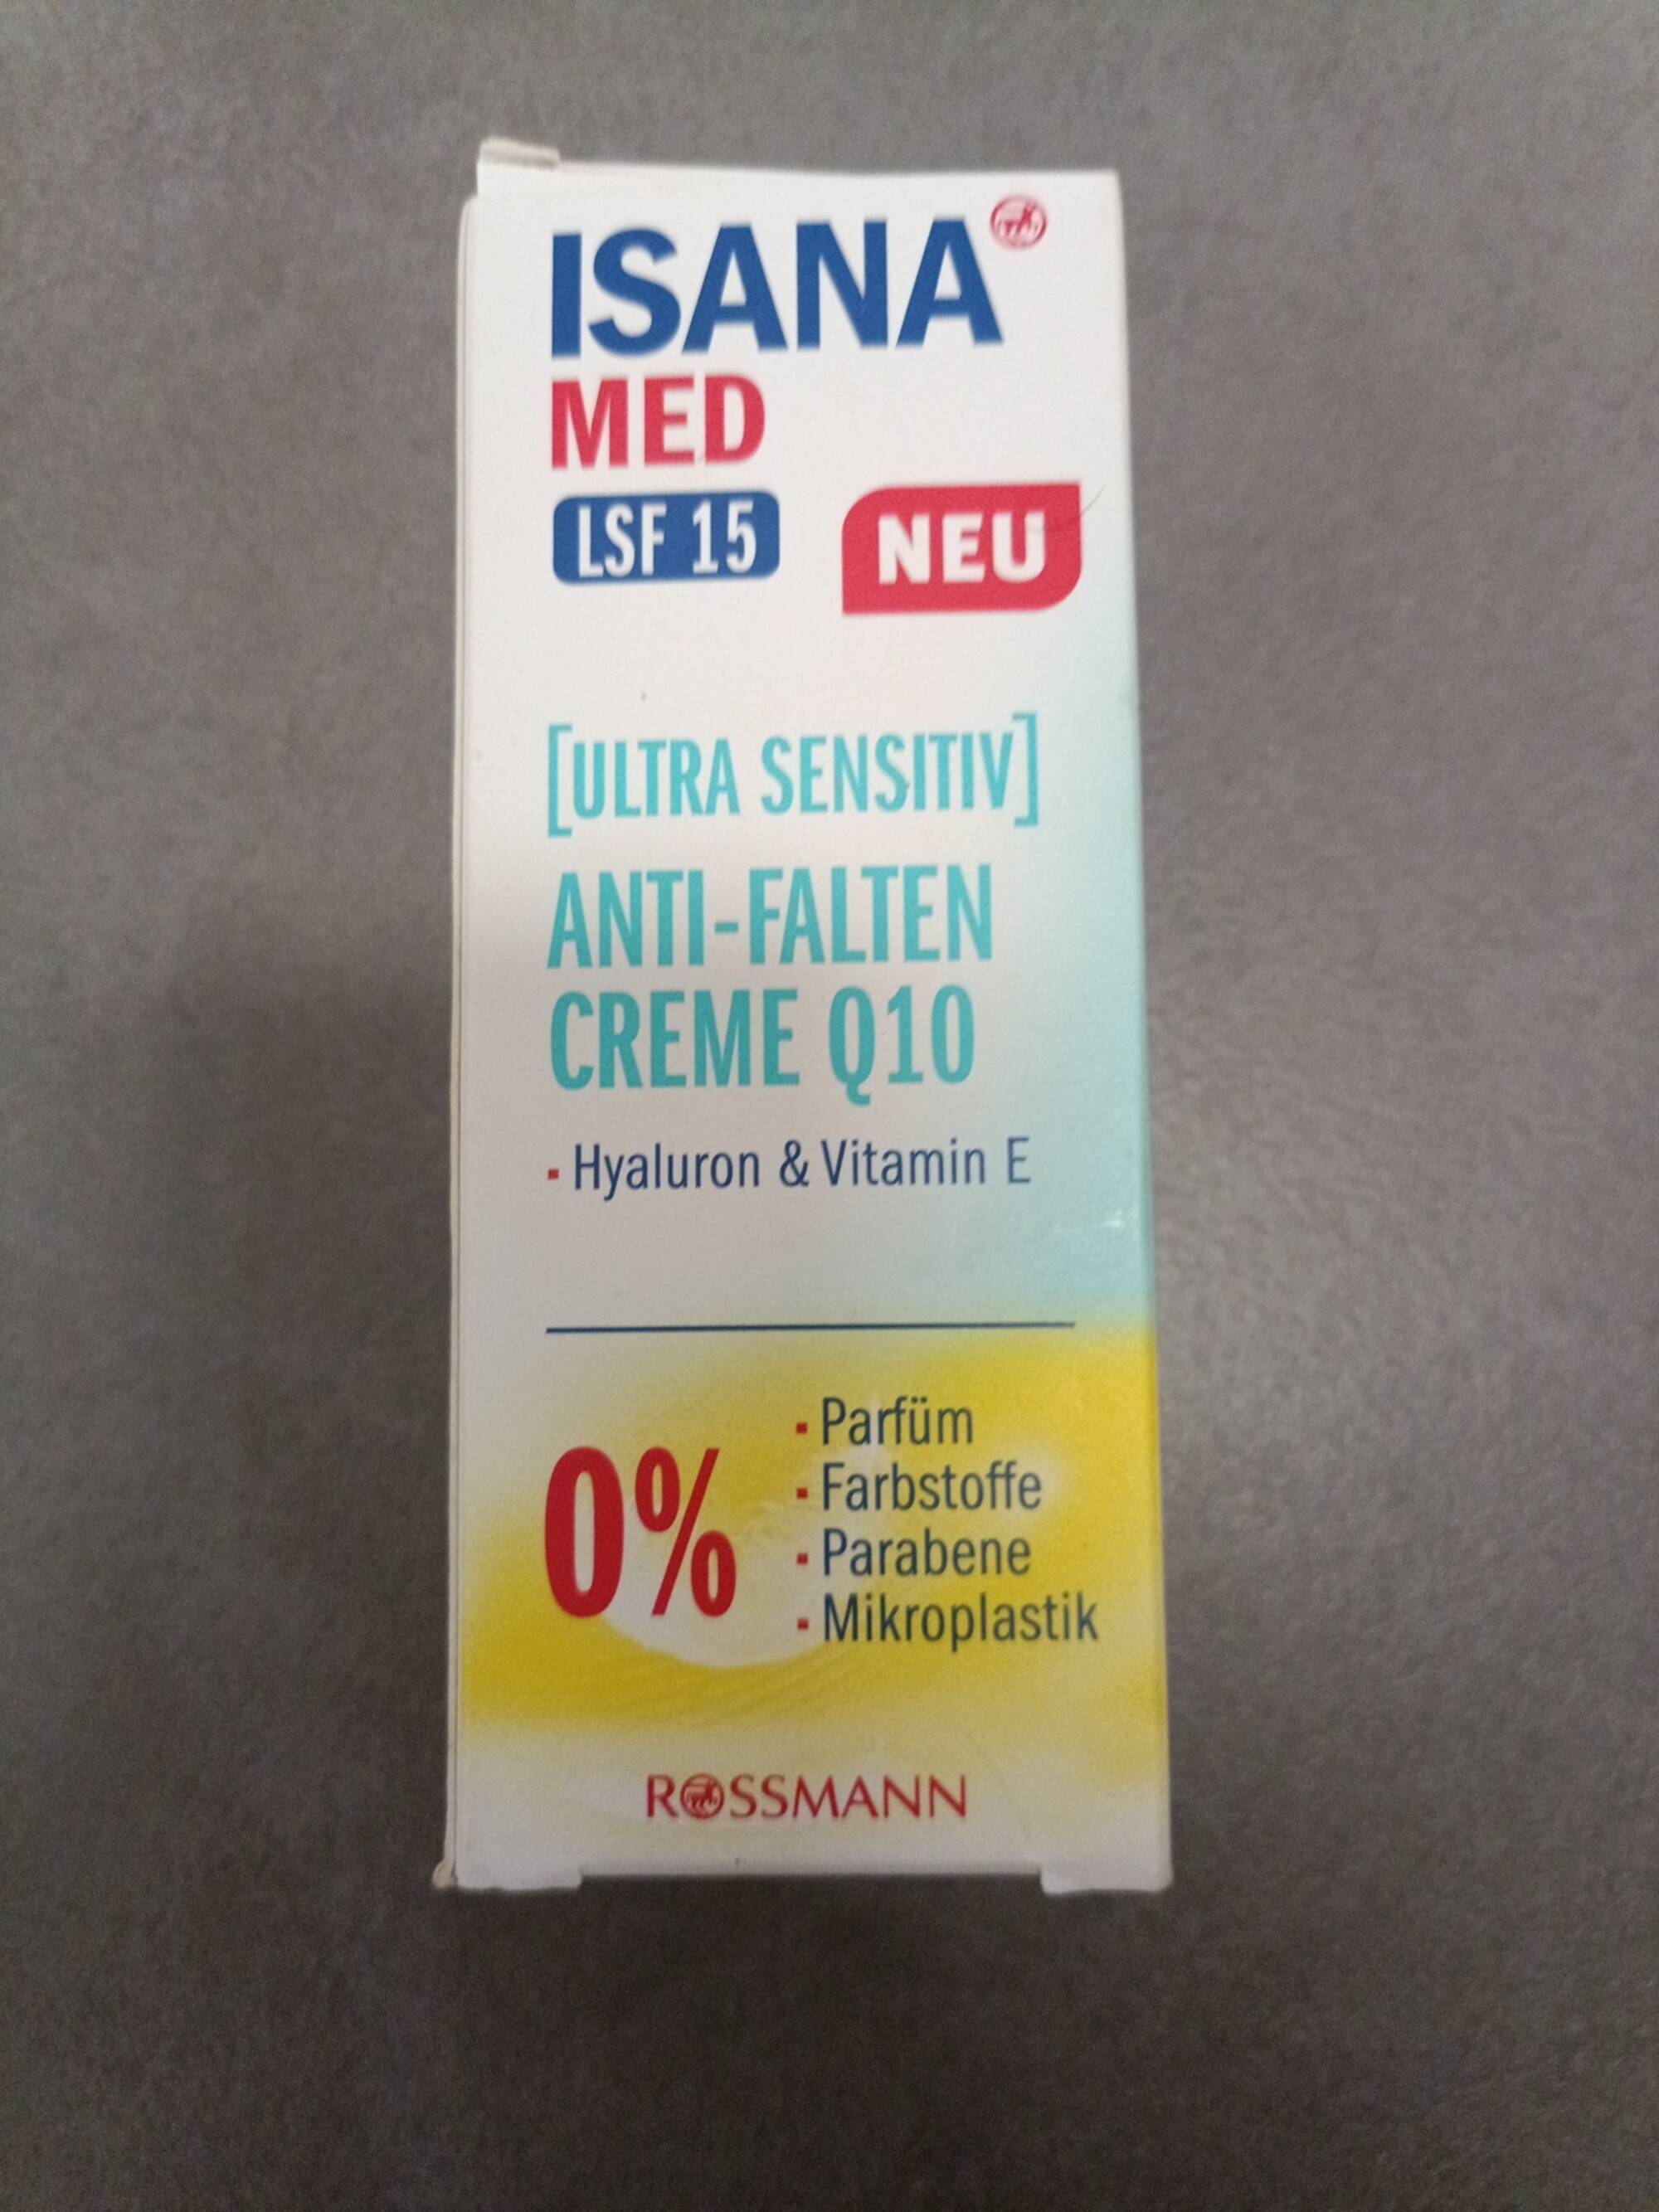 ROSSMANN - Isana med - Anti-falten creme Q10